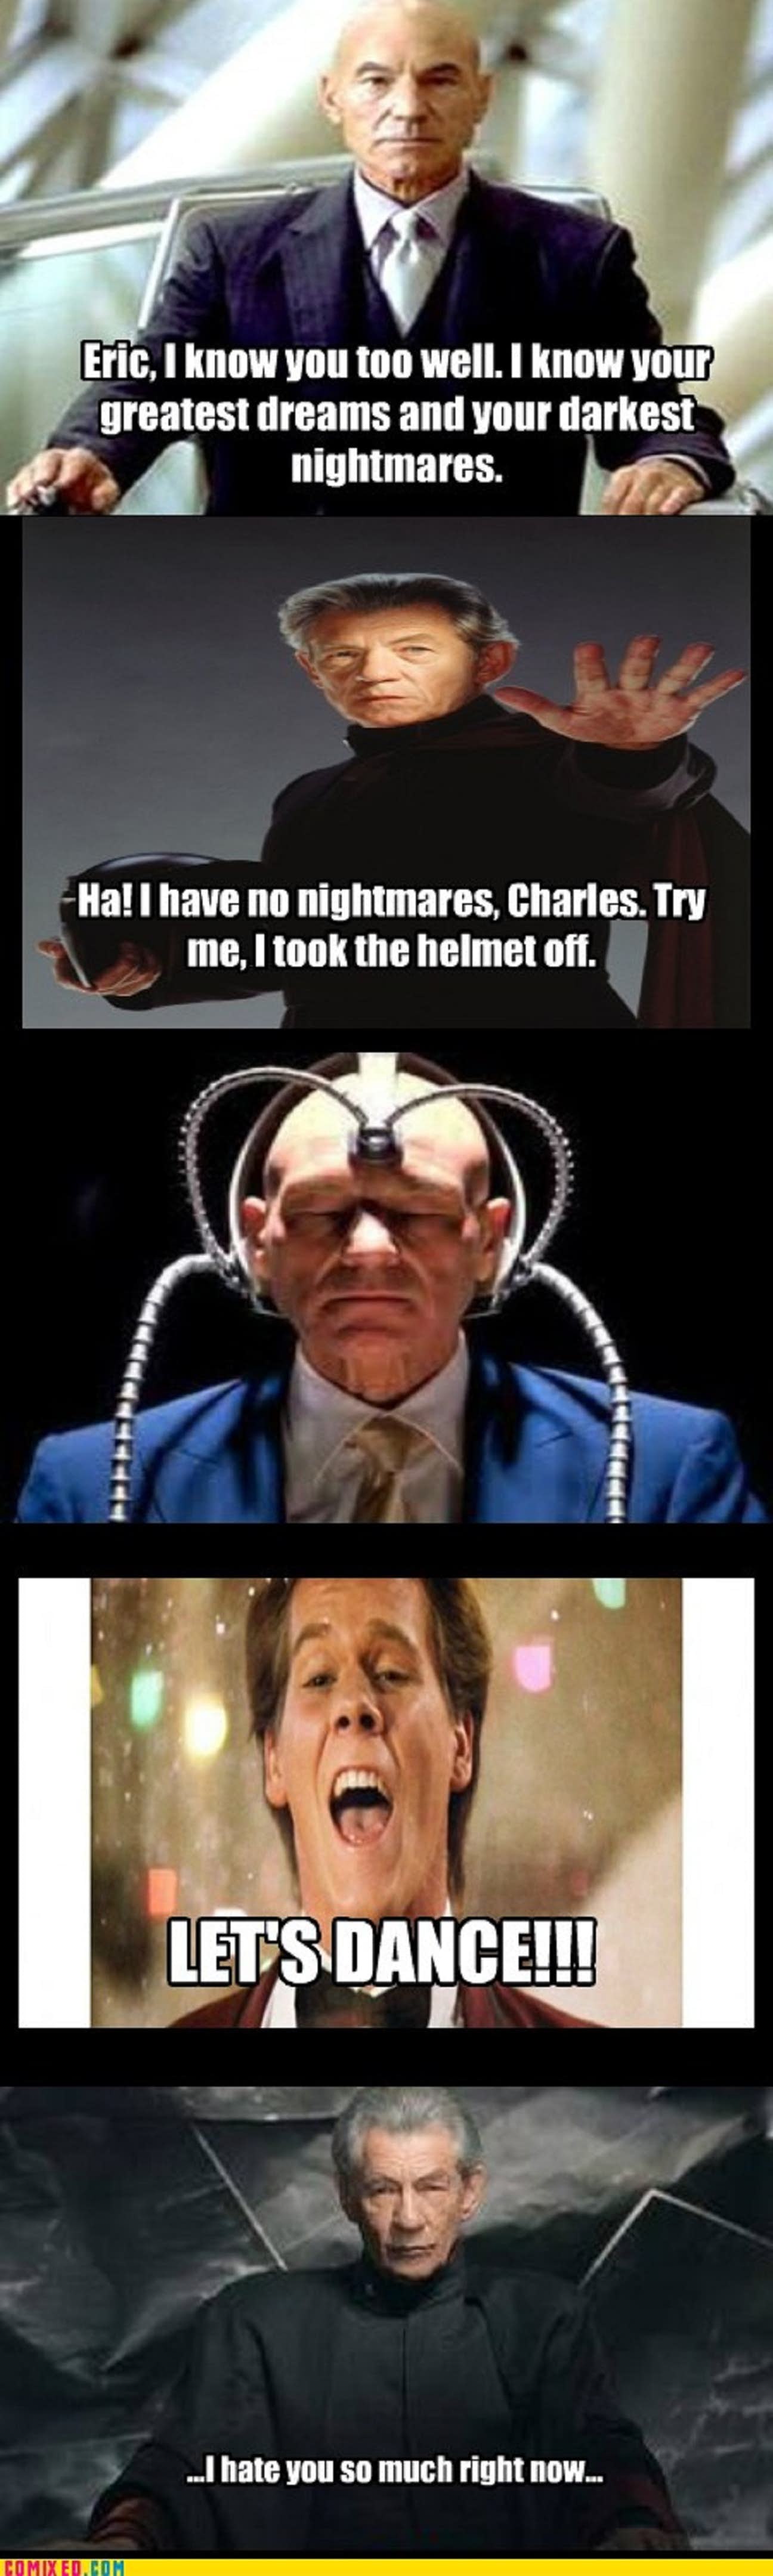 Professor X vs Magneto memes